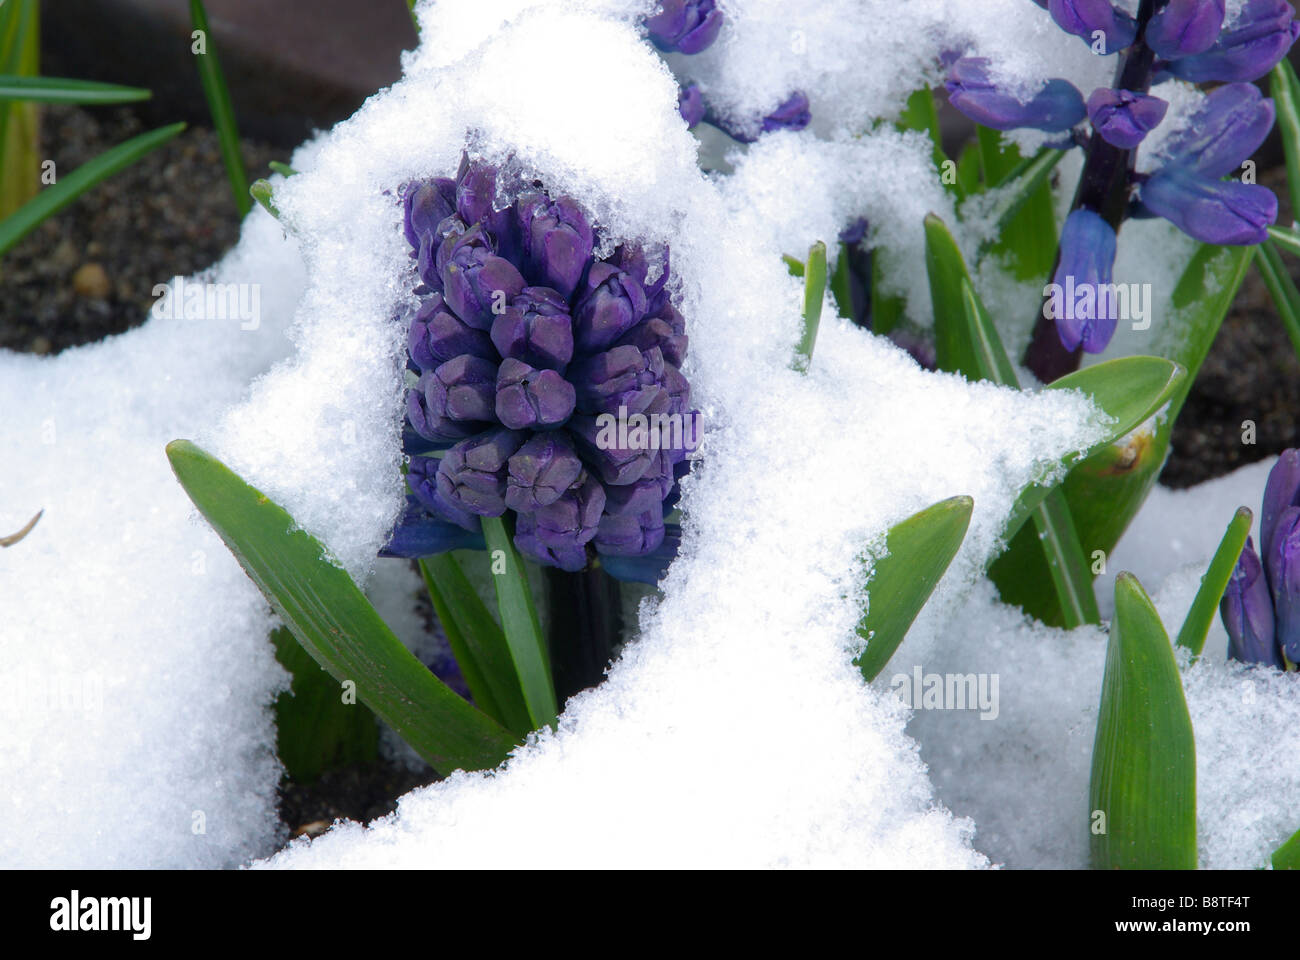 Hyazinthe im Schnee hyacinth in snow 01 Stock Photo